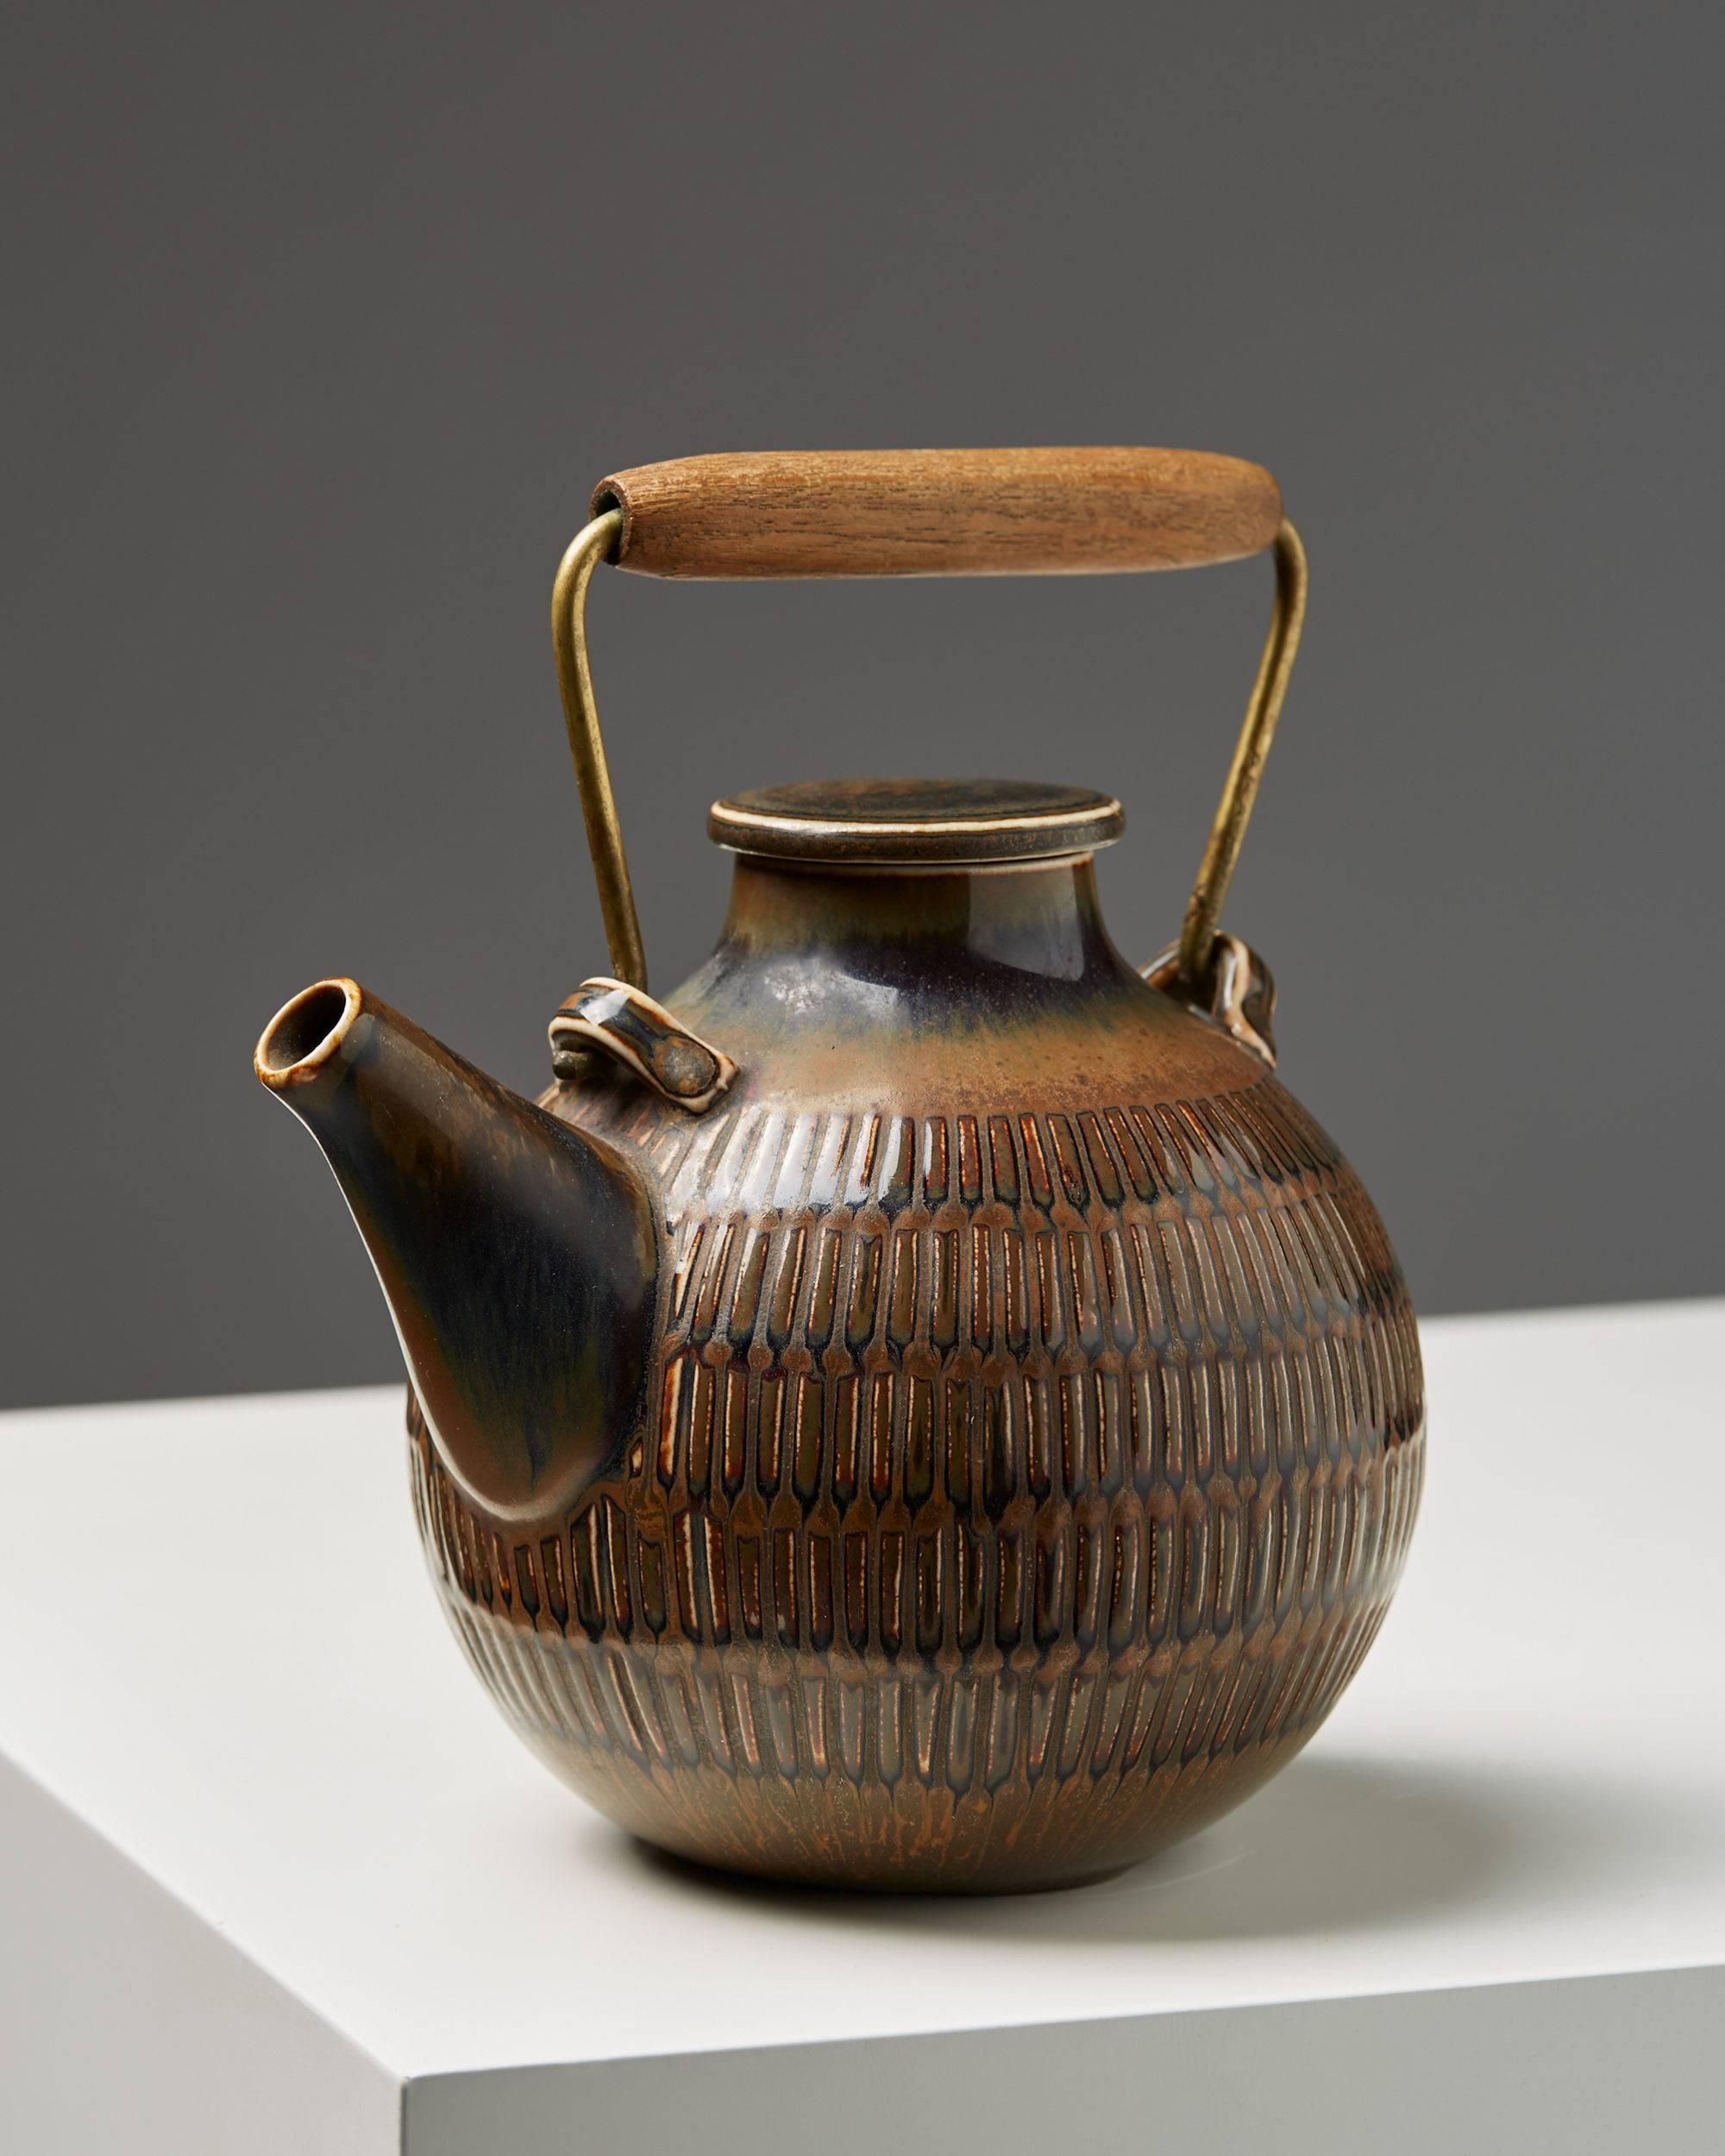 Teapot designed by Stig Lindberg, Sweden, 1950s. Stoneware, bronze and wood.

Measures: H 17 cm/ 6 3/4